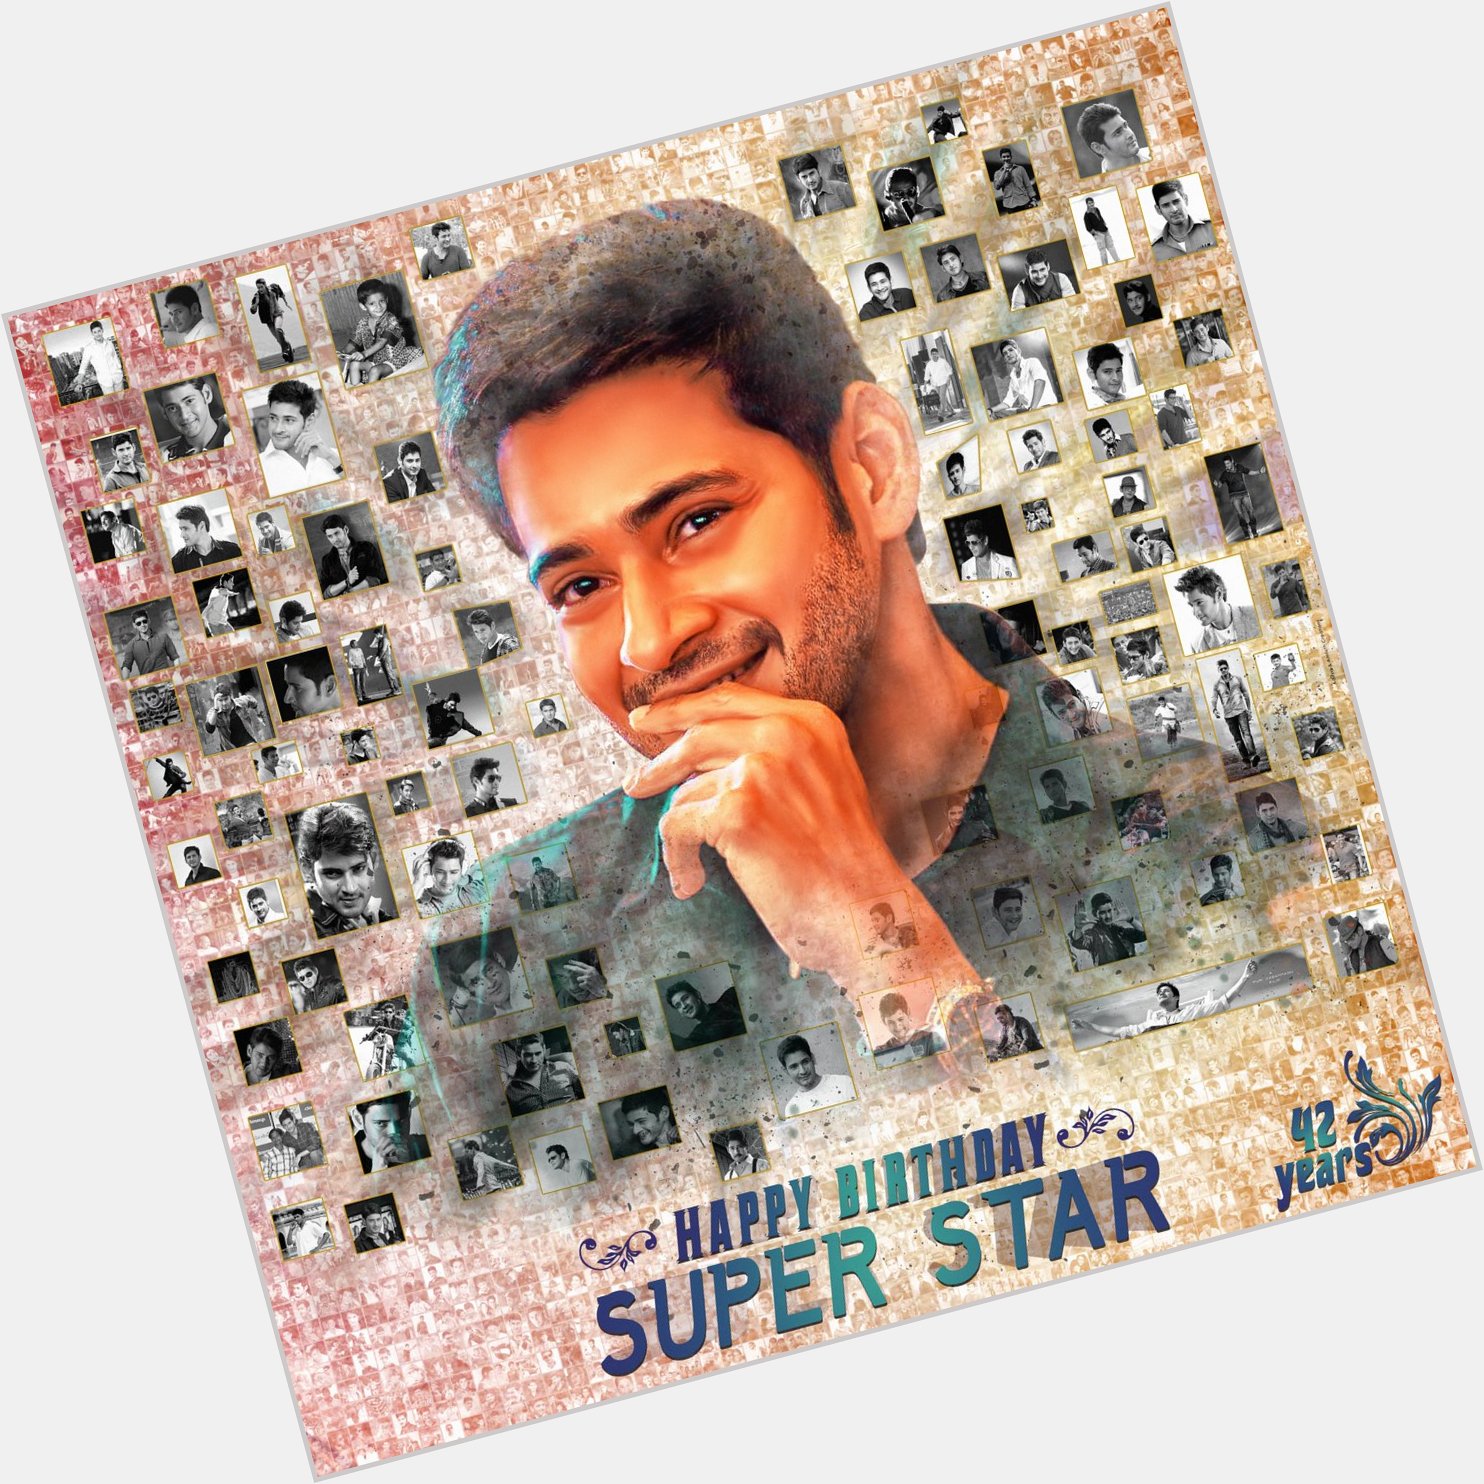 Happy Birthday Super star Mahesh babu :) <3

HD Link : 
© 